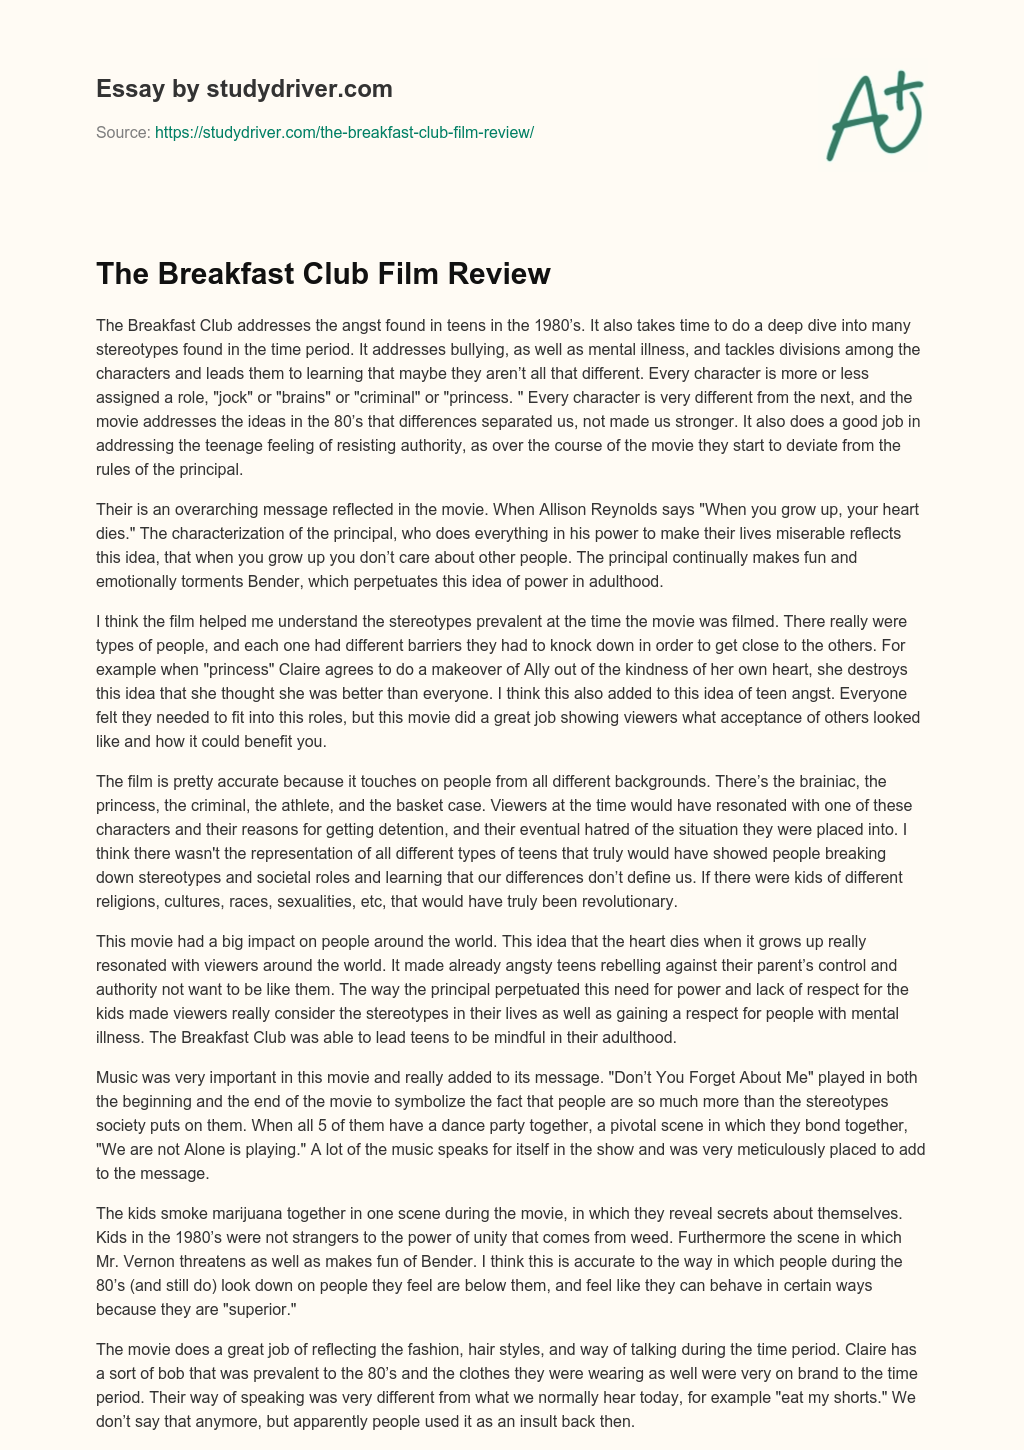 The Breakfast Club Film Review essay